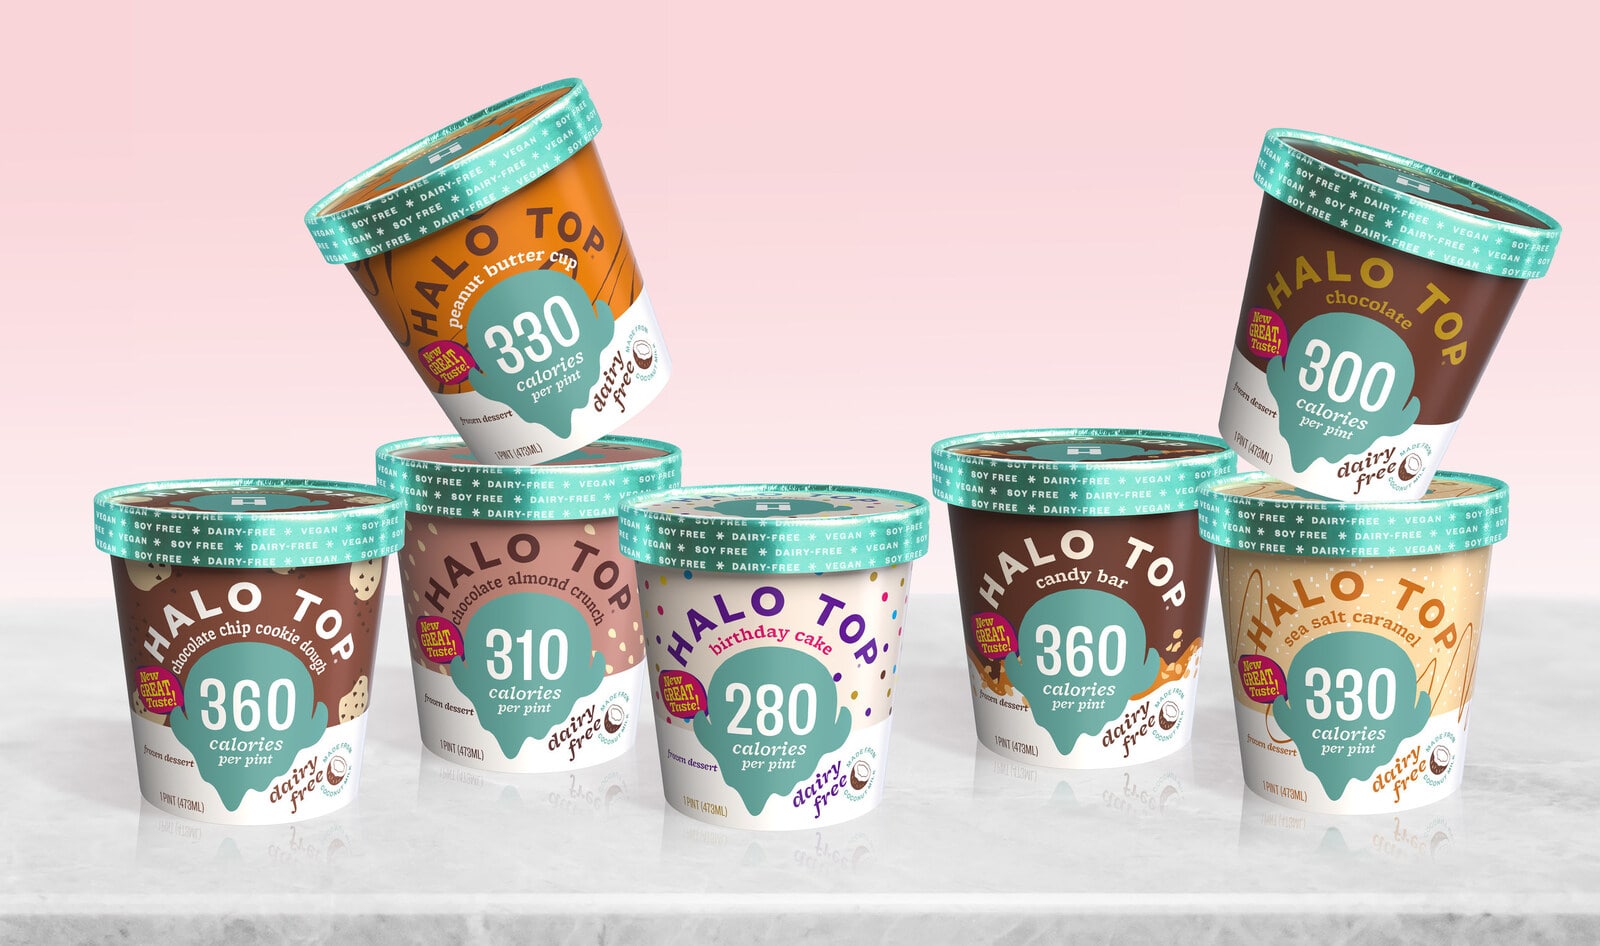 Ice Cream Brand Halo Top Reformulates Vegan Flavors with Fava Beans&nbsp;